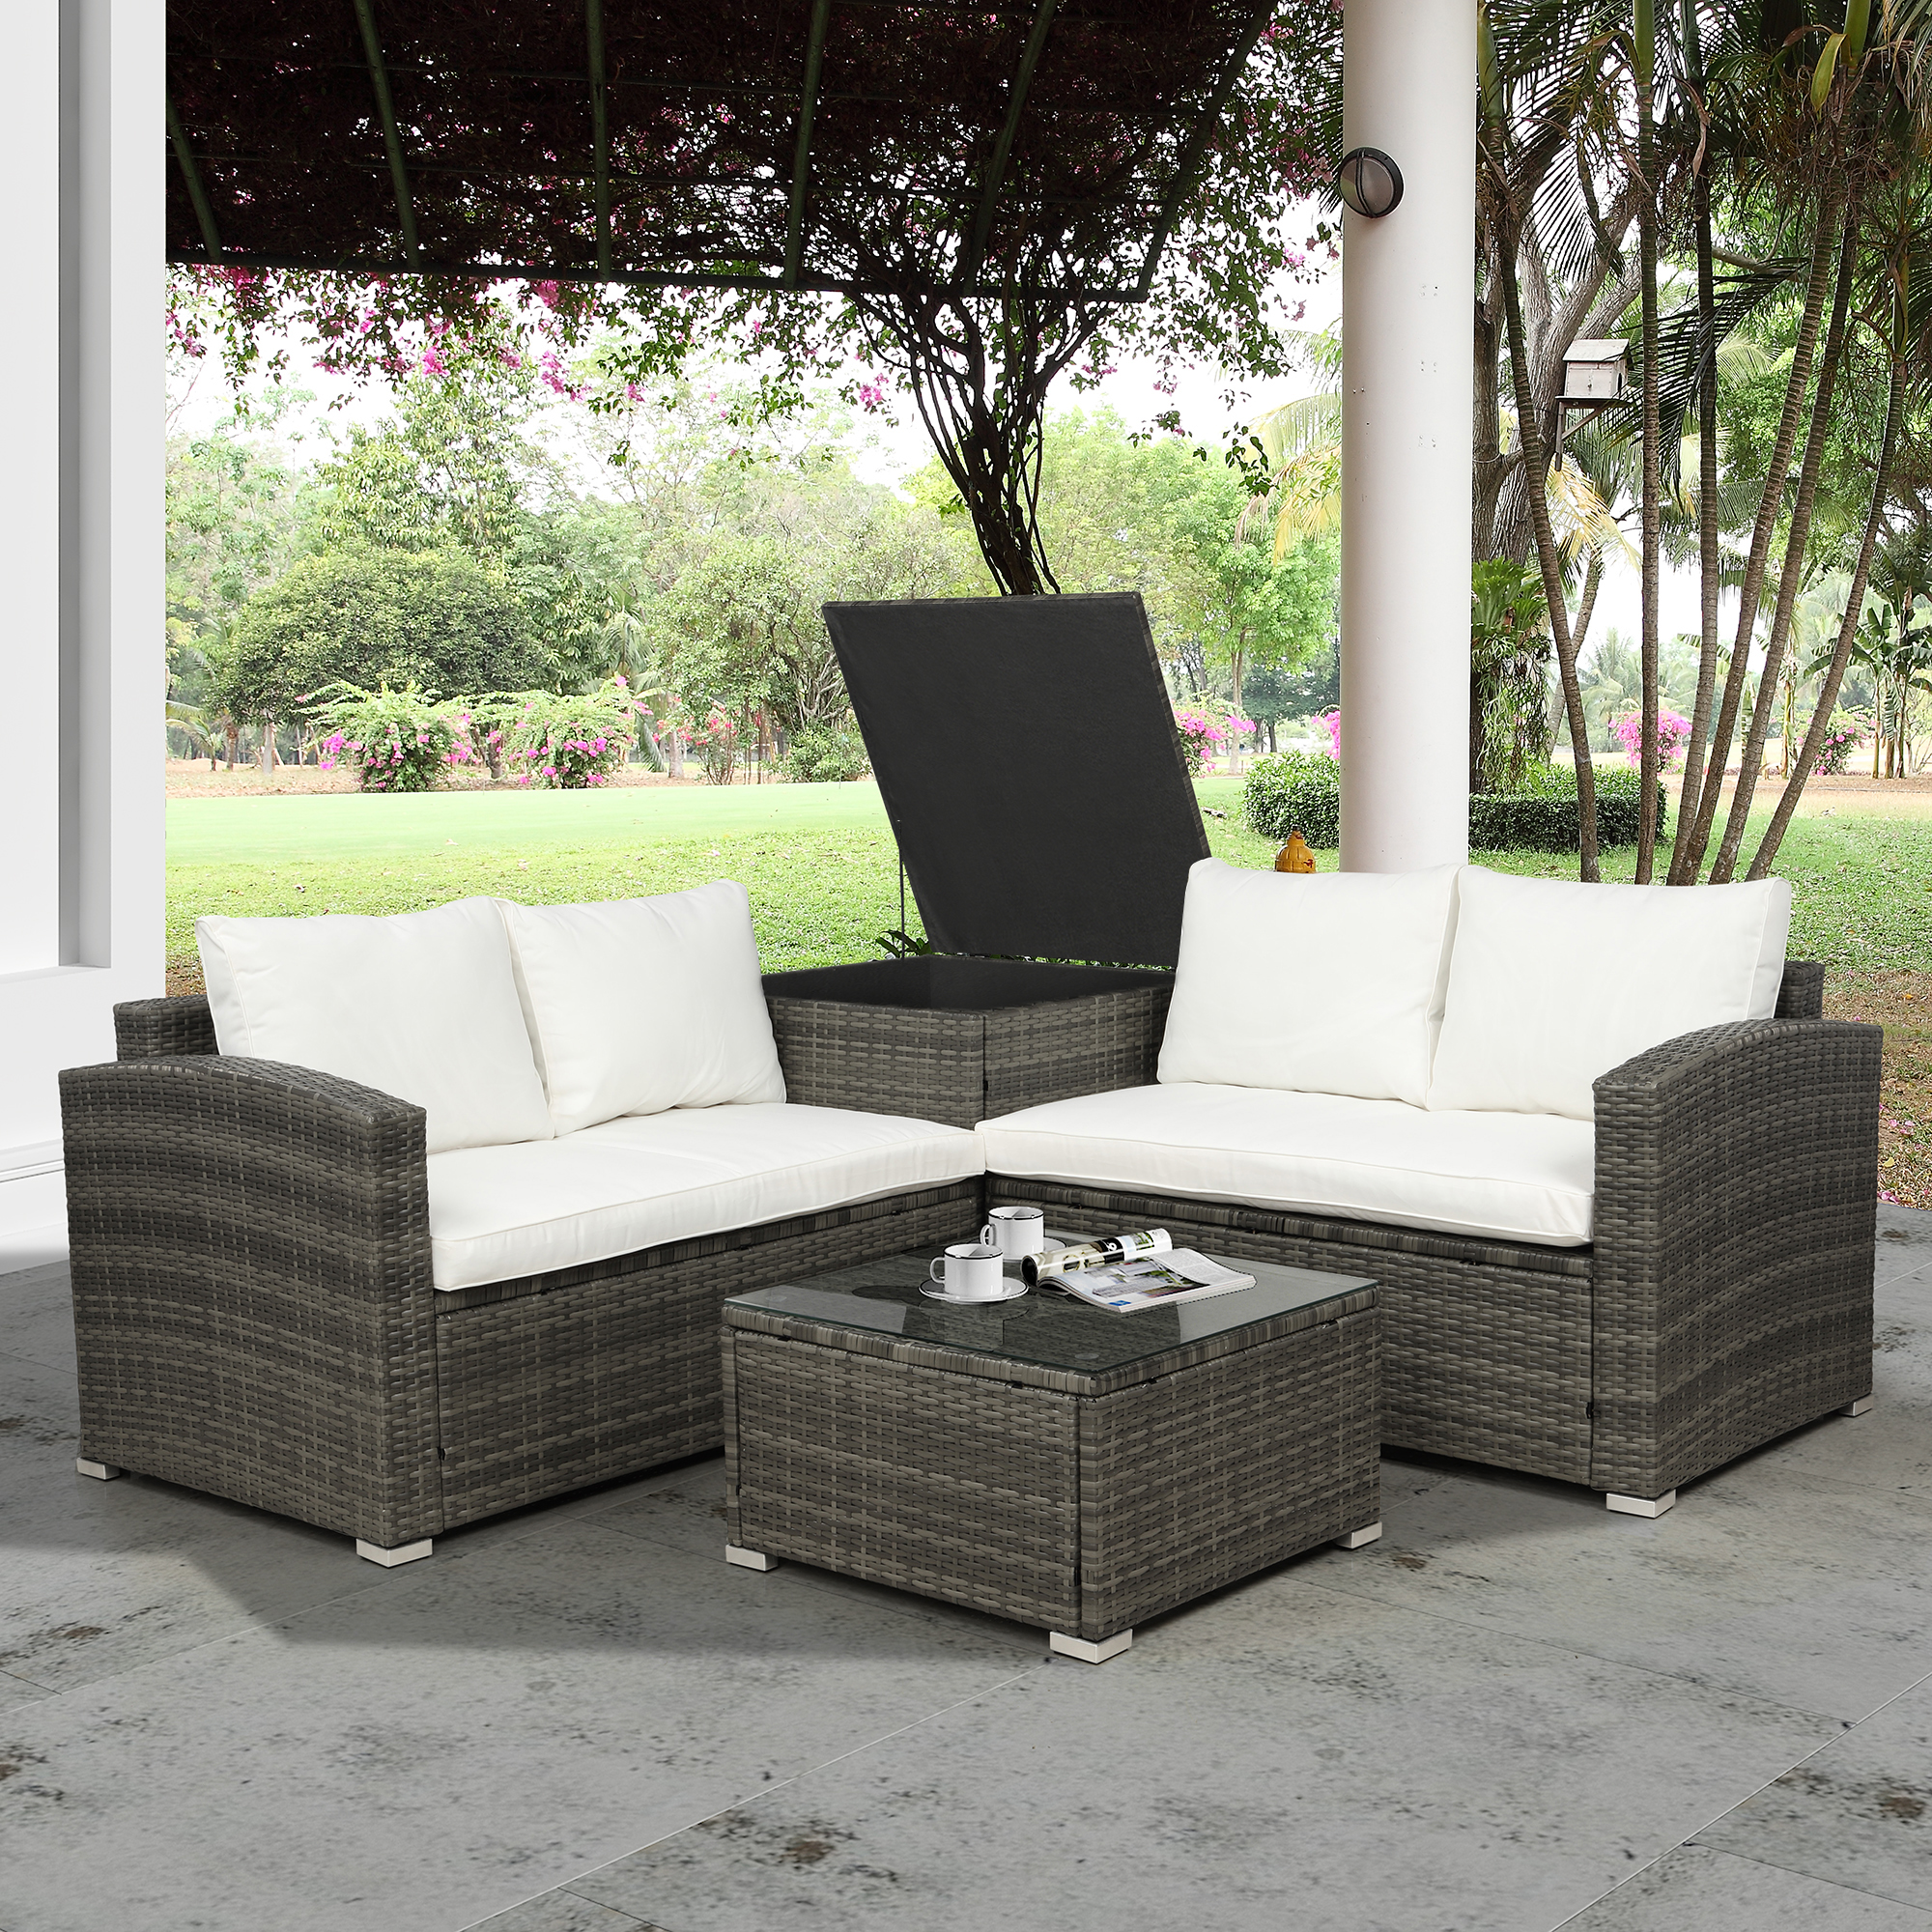 Mondawe 4 PCS Outdoor Cushioned PE Rattan Wicker Sectional Sofa Set Garden Patio Furniture Set (Beige Cushion)-Mondawe